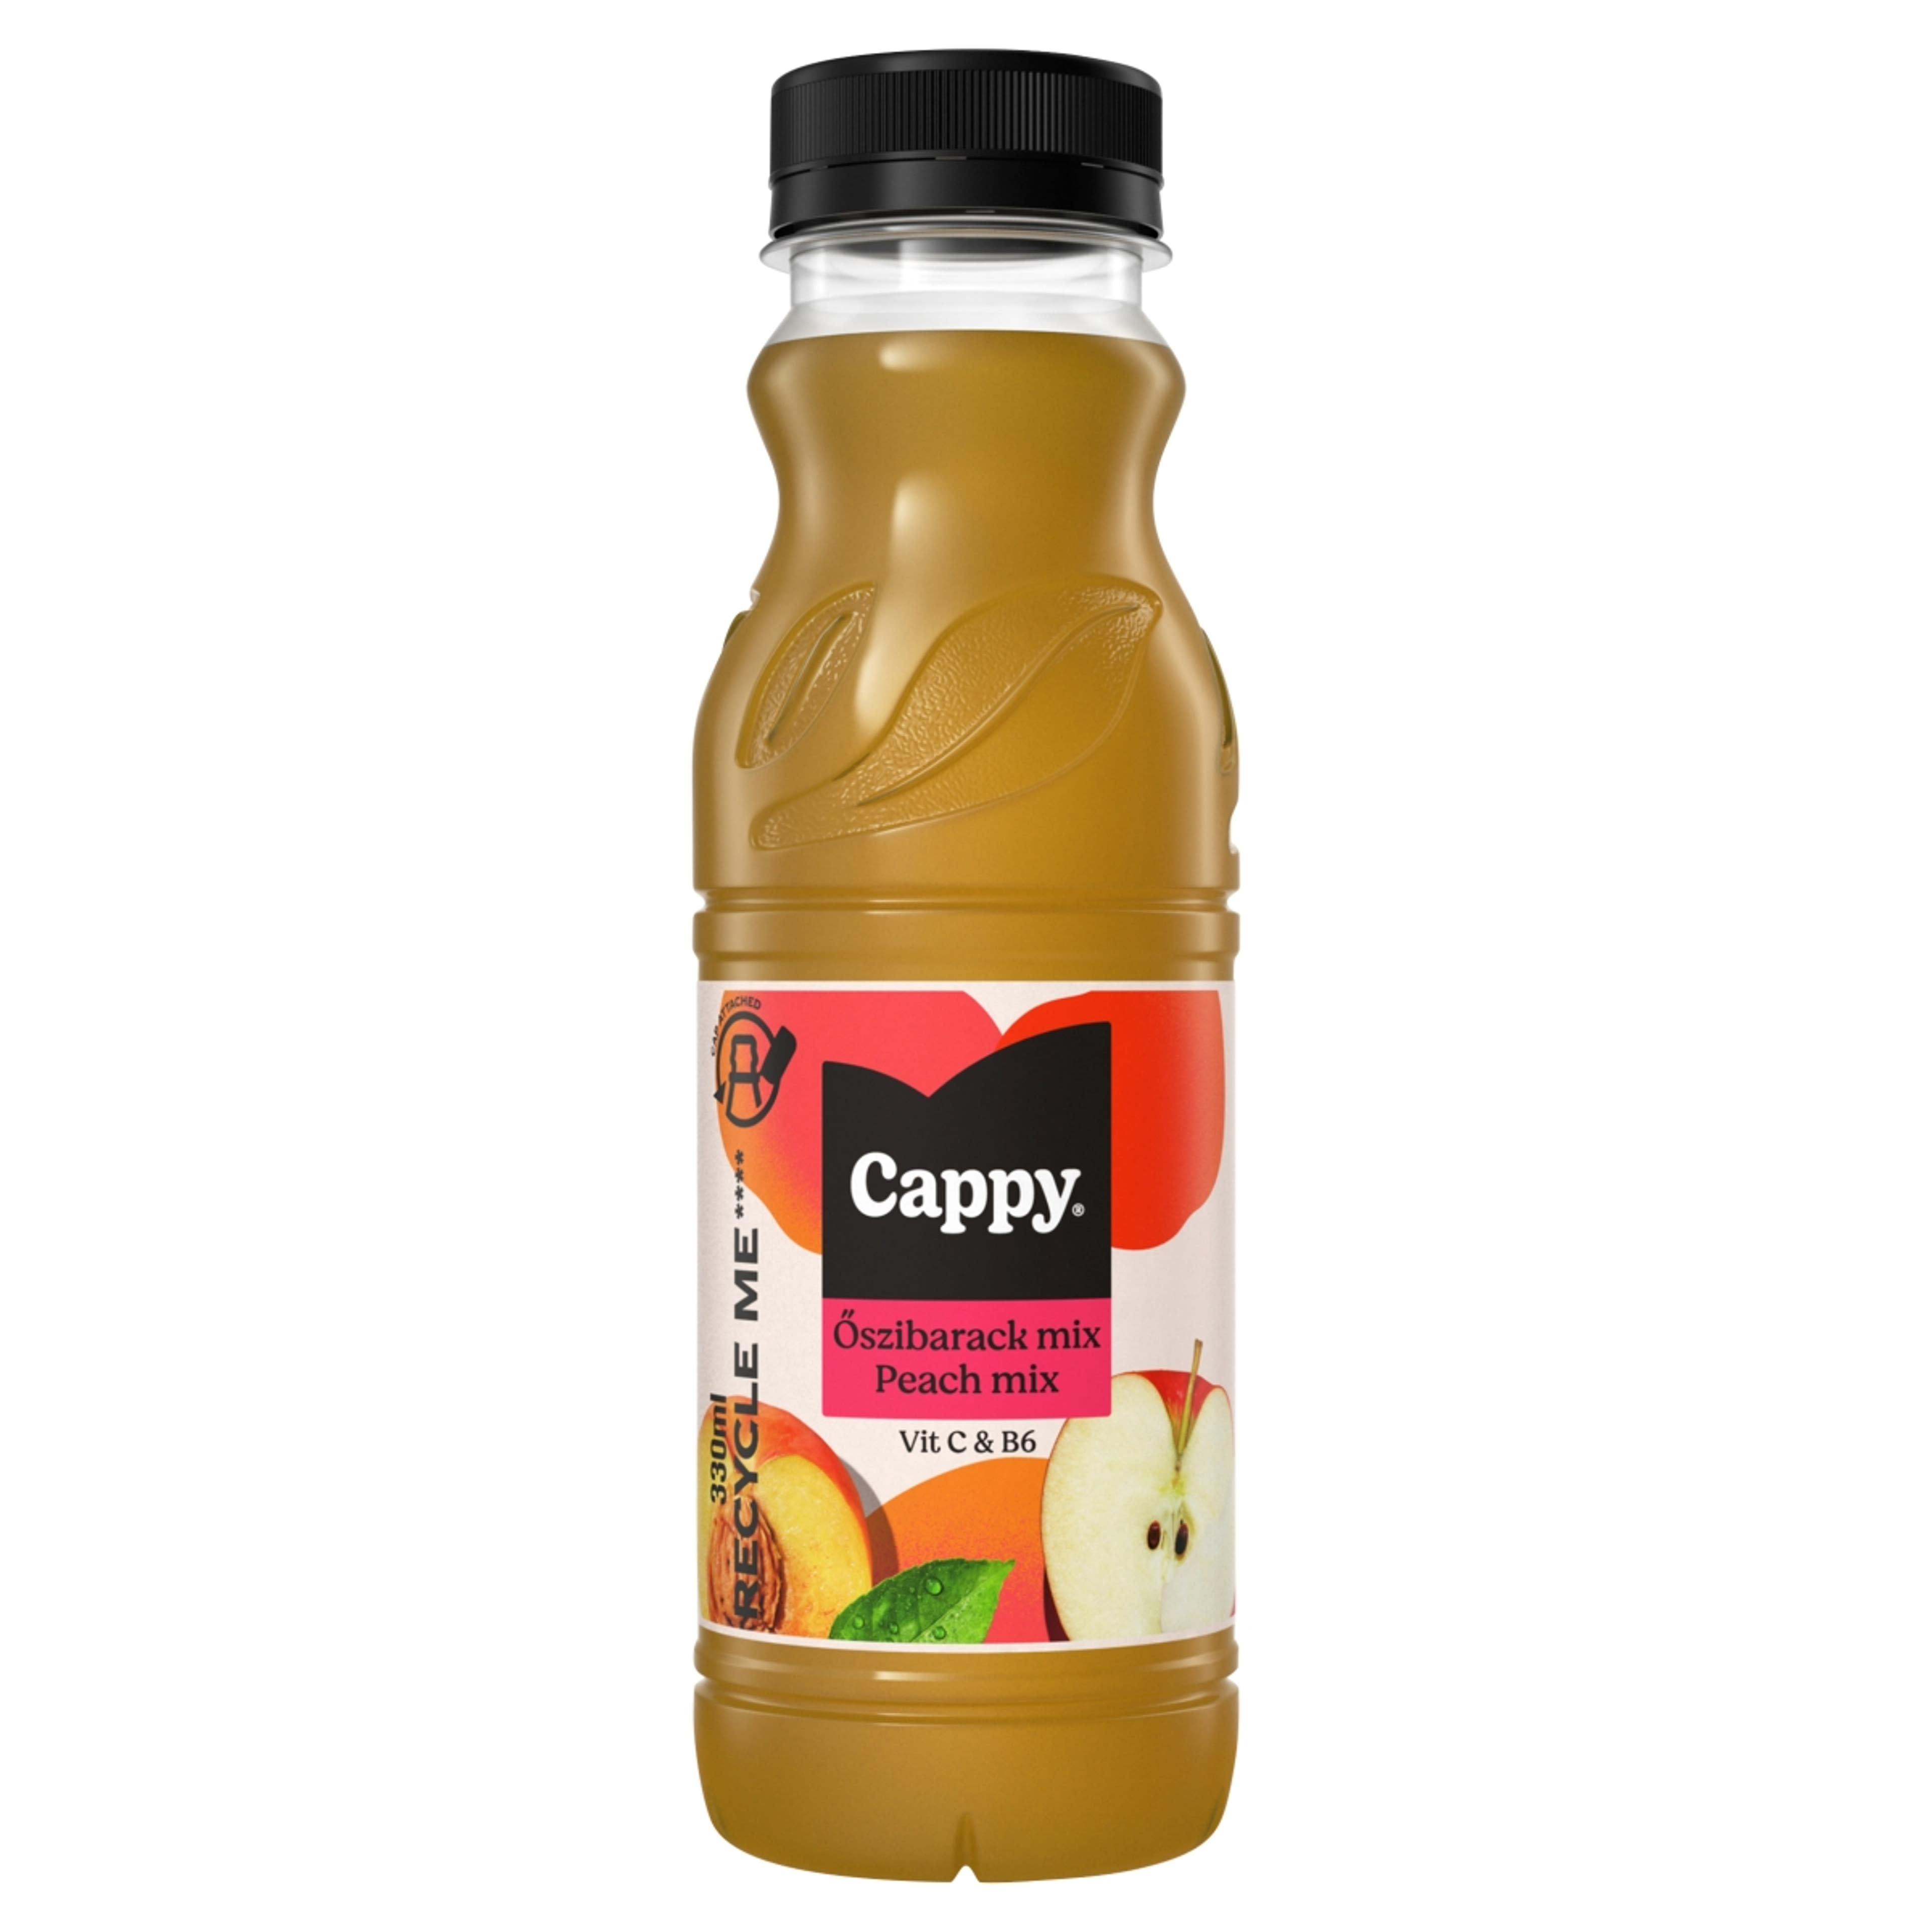 Cappy barack 46% - 330 ml